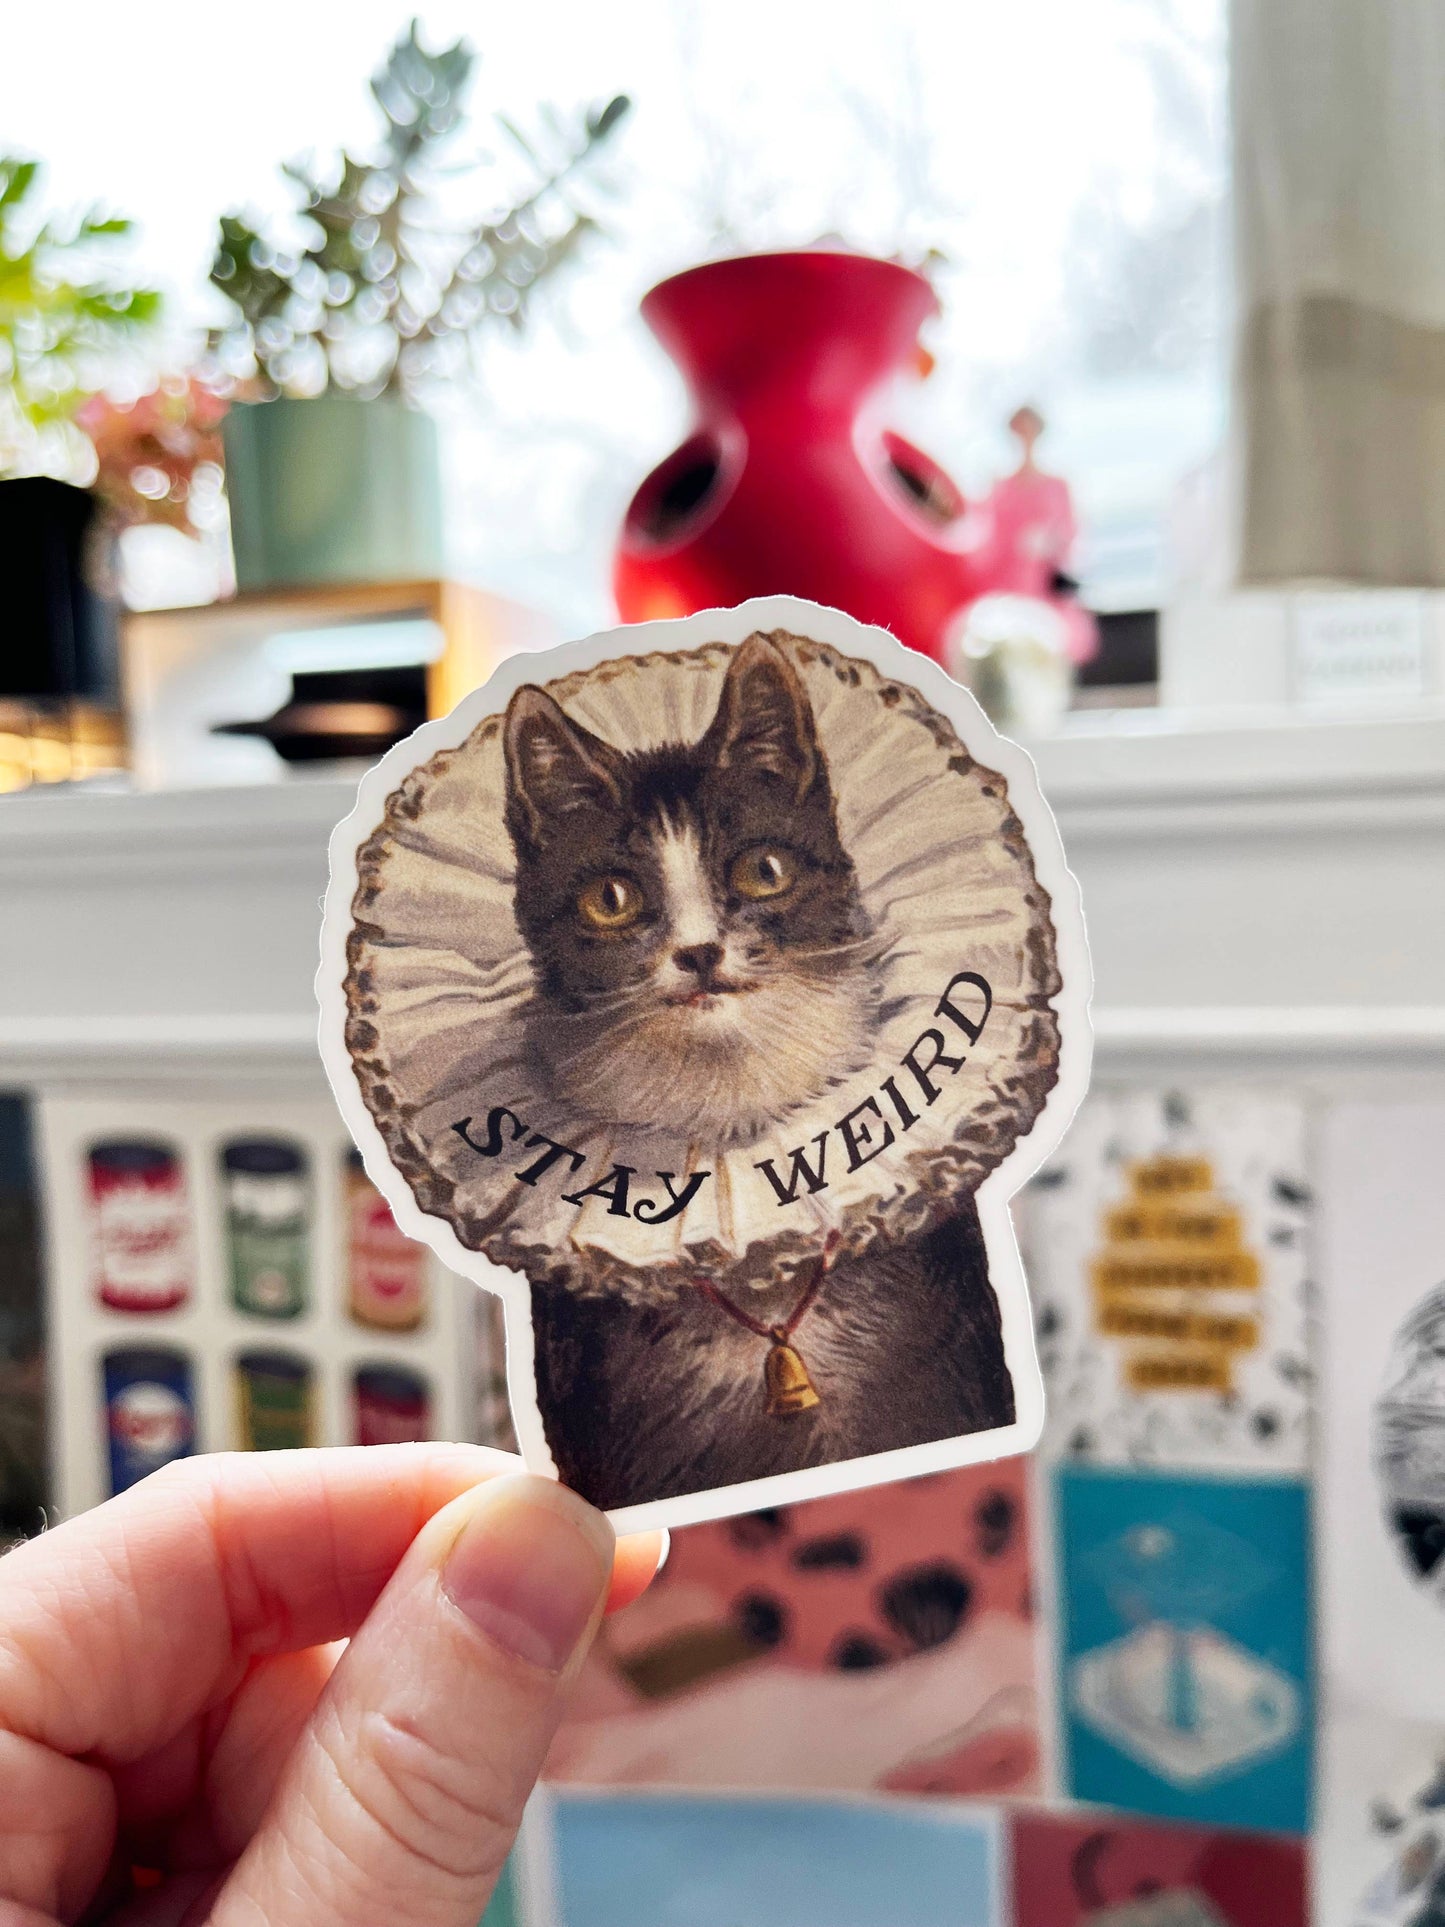 "Stay Weird Kitty" Sticker